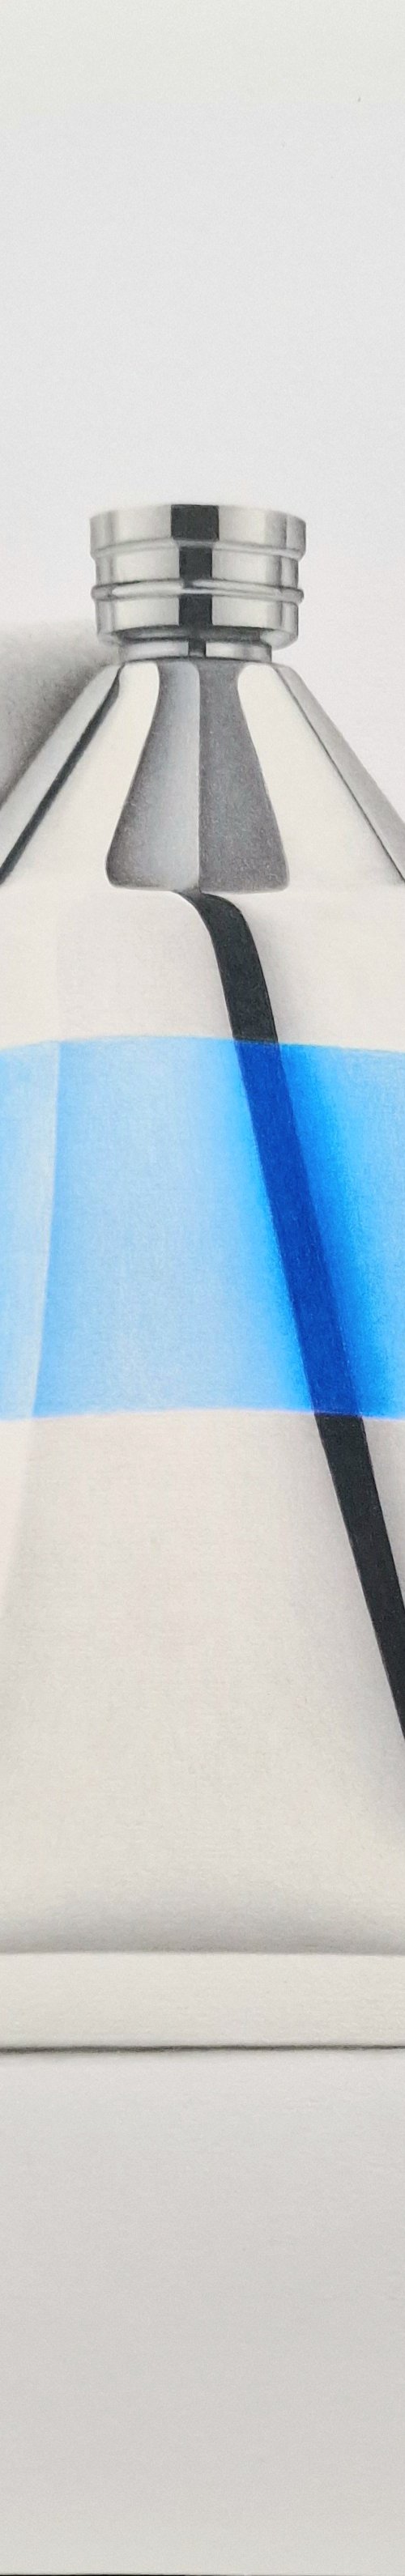 Tube Of Blue Paint by Daniel Shipton